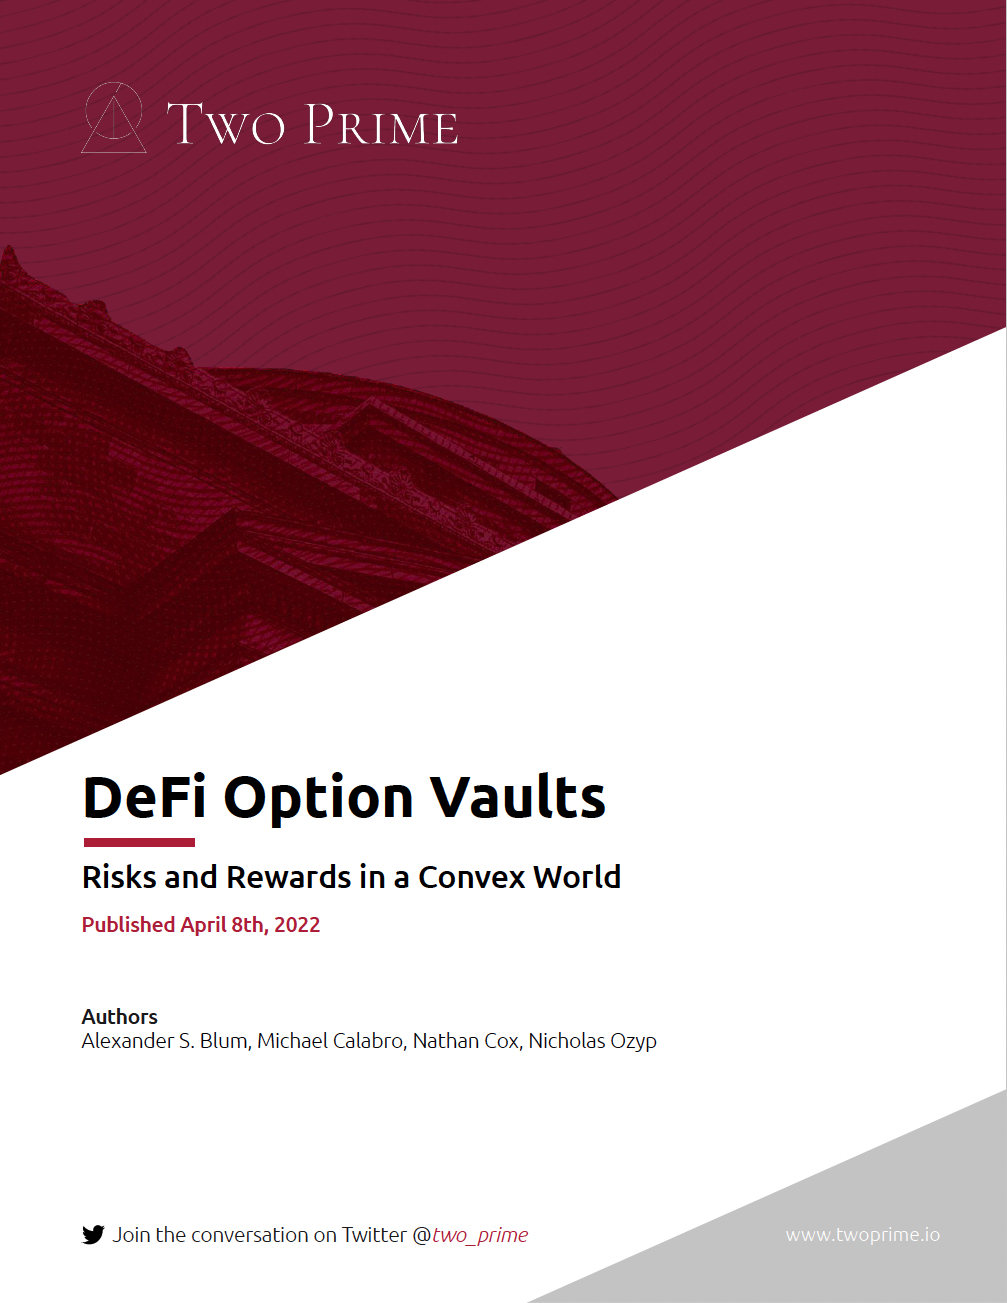 DeFi Option Vaults: Risks and Rewards in a Convex World